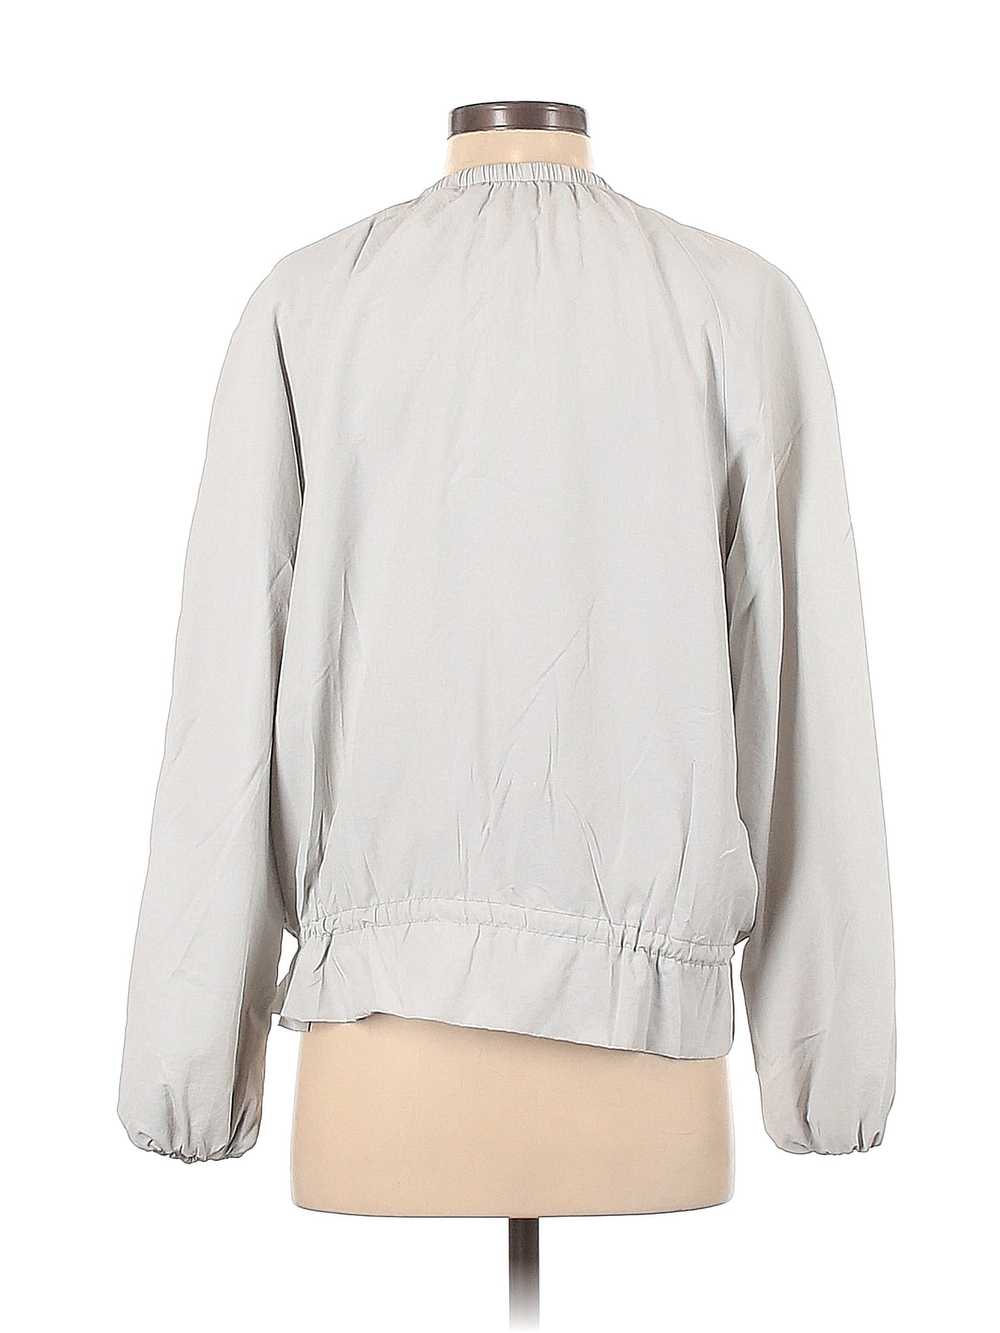 Zara Basic Women Gray Jacket S - image 2